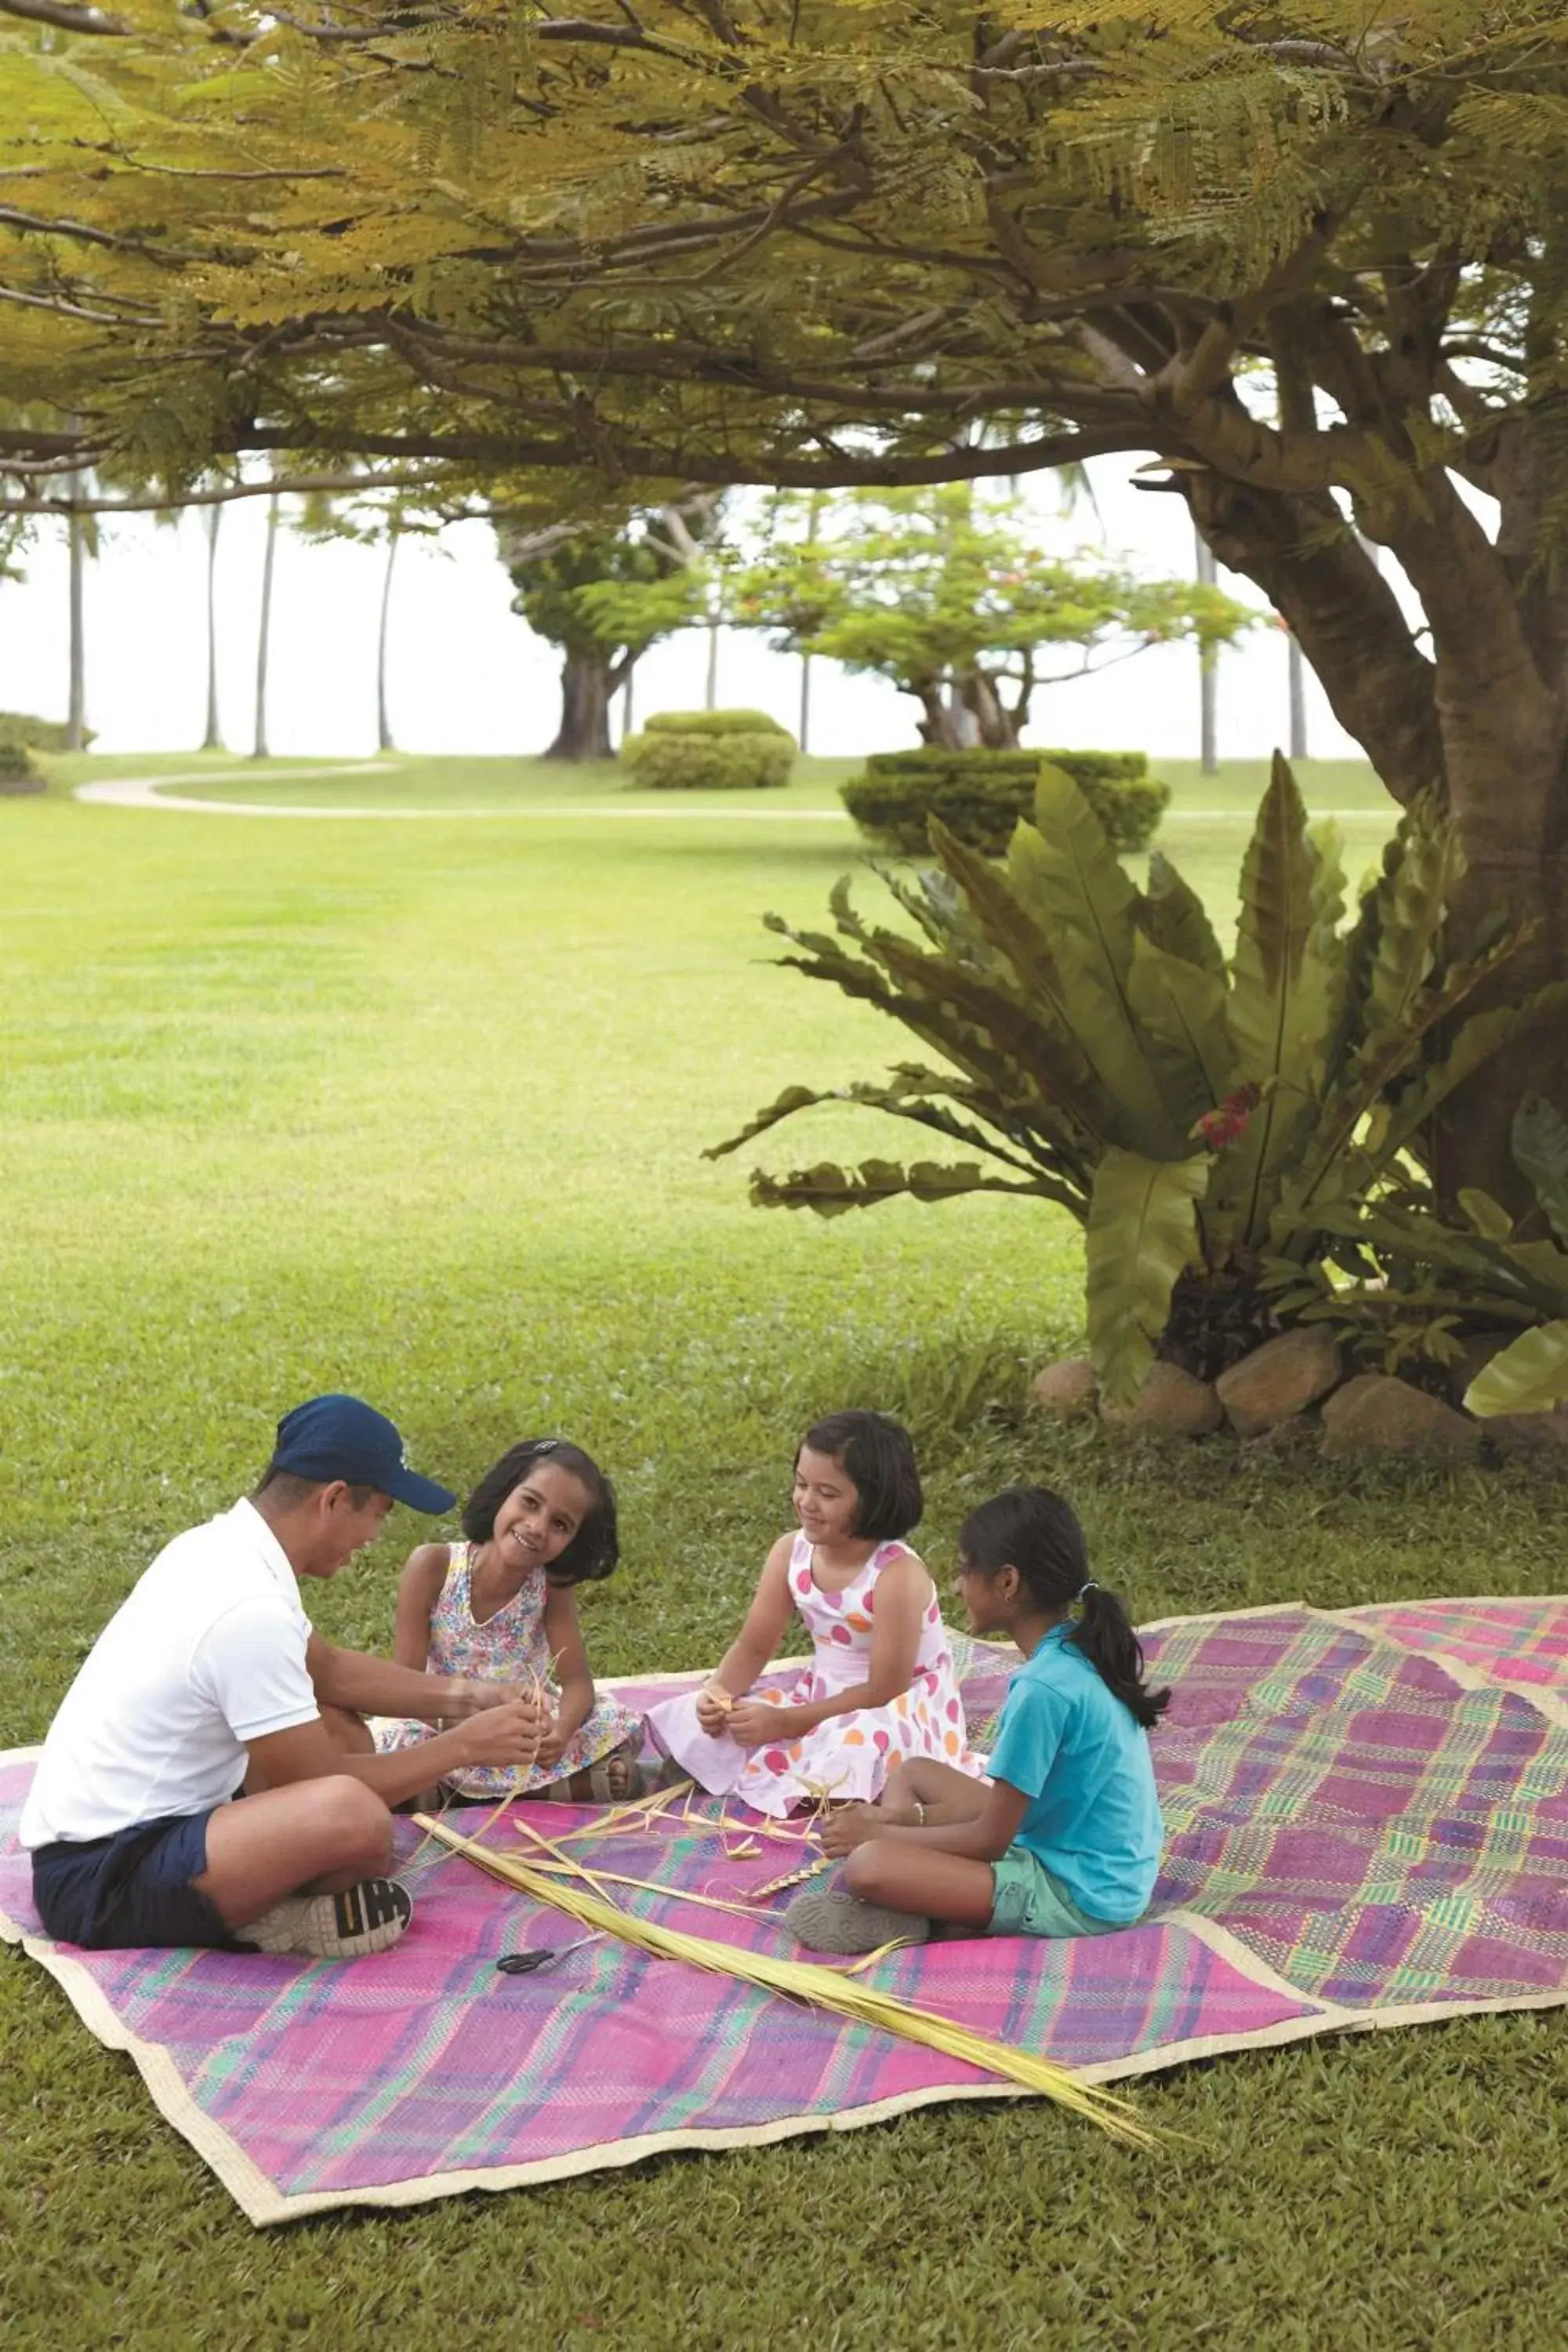 On site, Children in Shangri-La Tanjung Aru, Kota Kinabalu